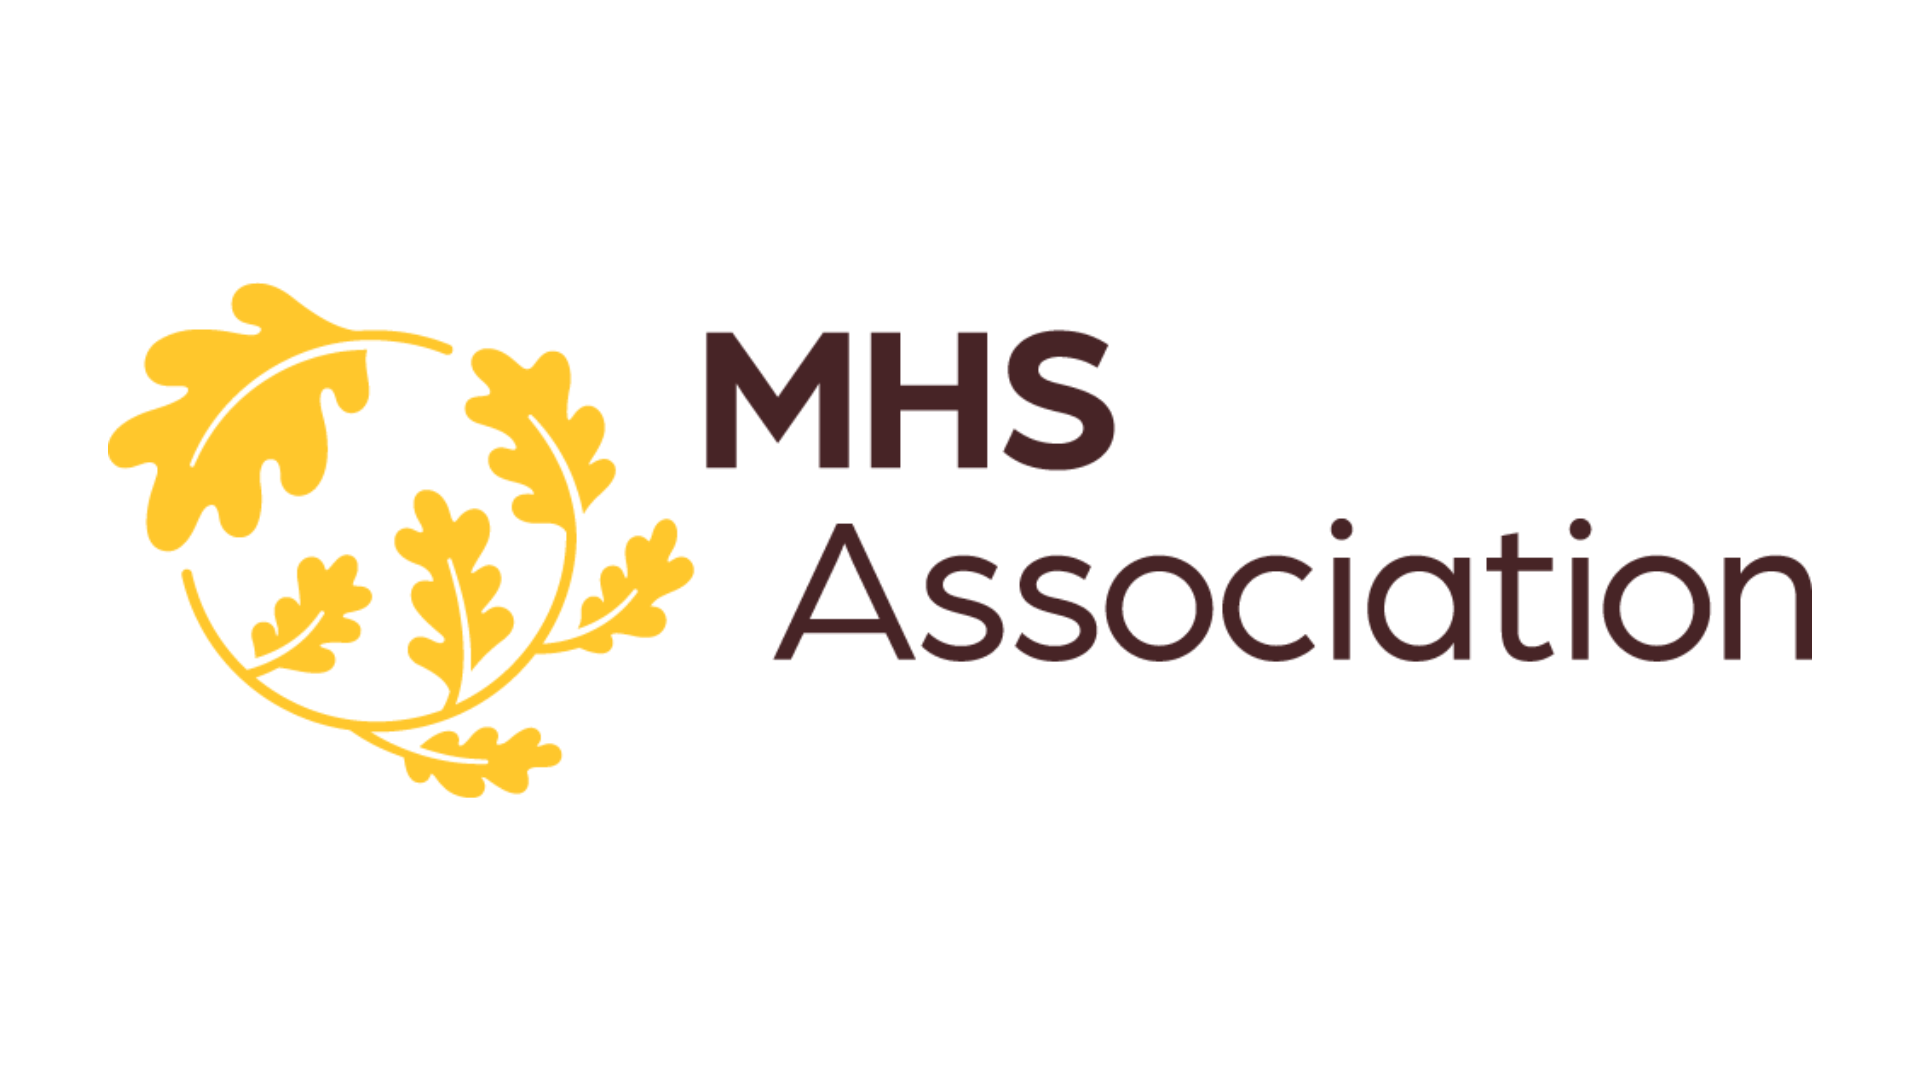 MHS Association logo_16x9